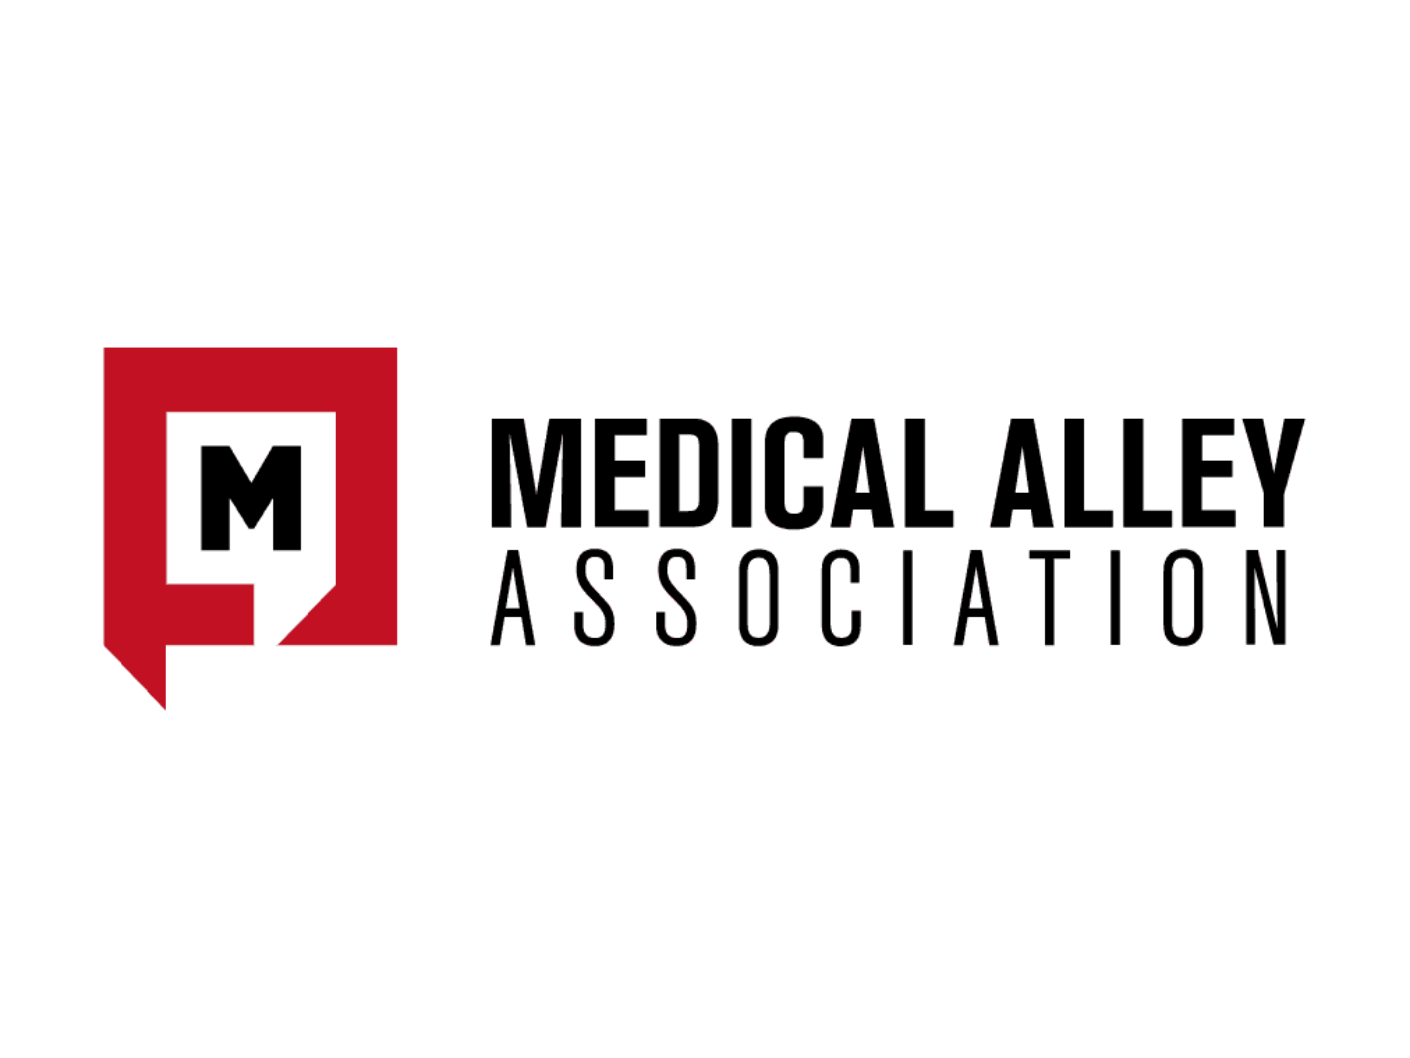 Medical Alley Association